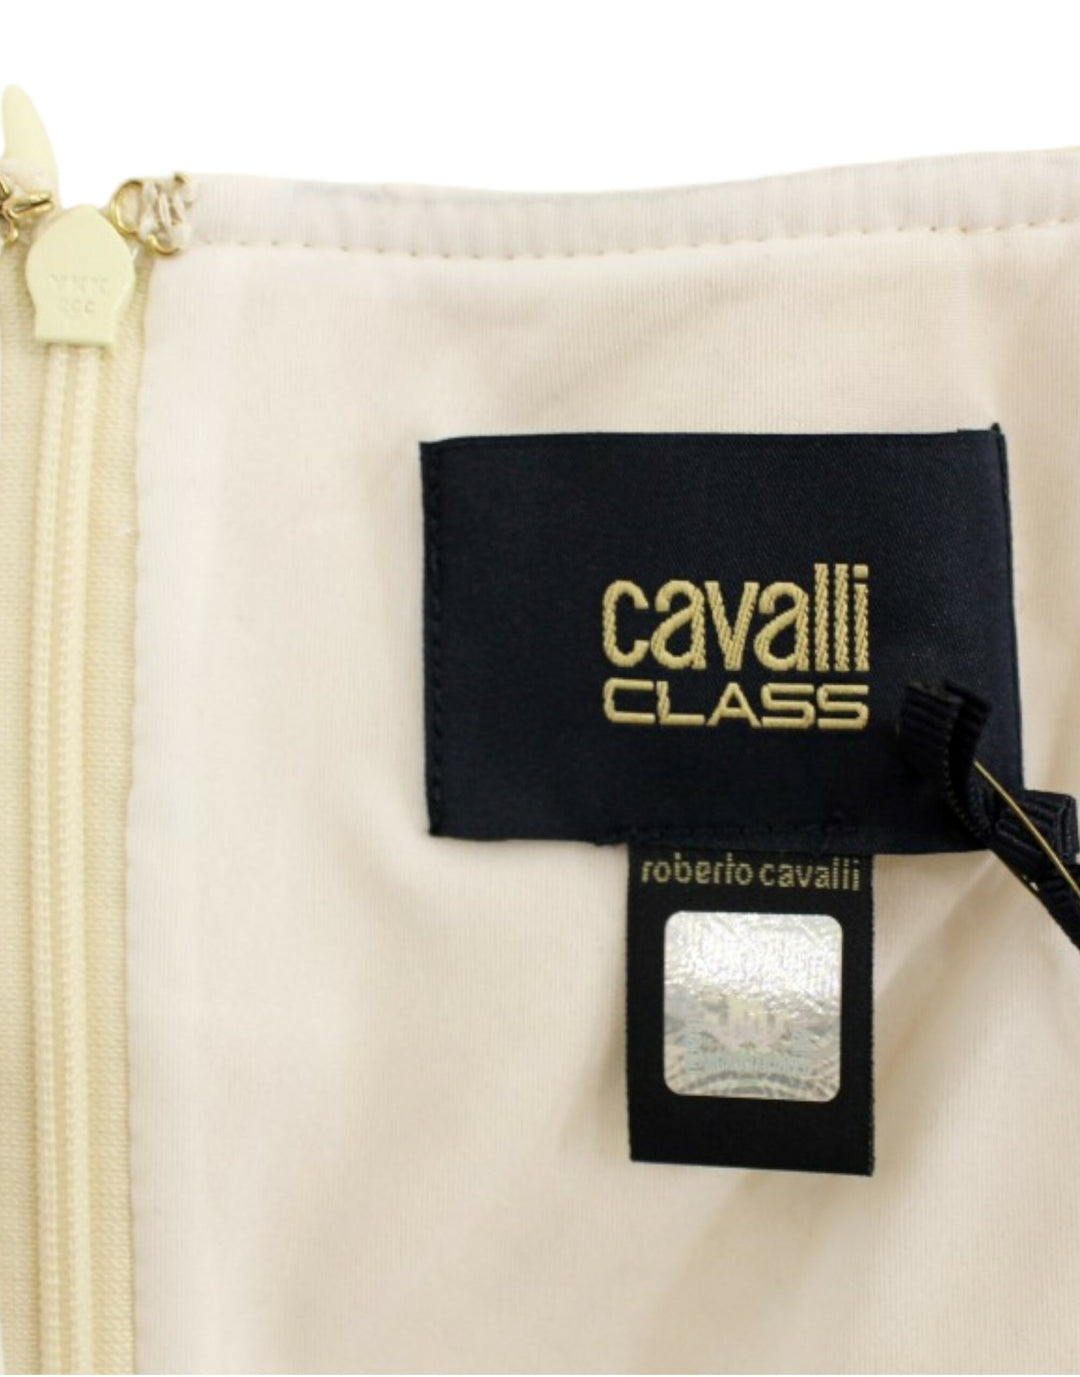 Cavalli Elegant Sheath Lace Dress in Black and Beige